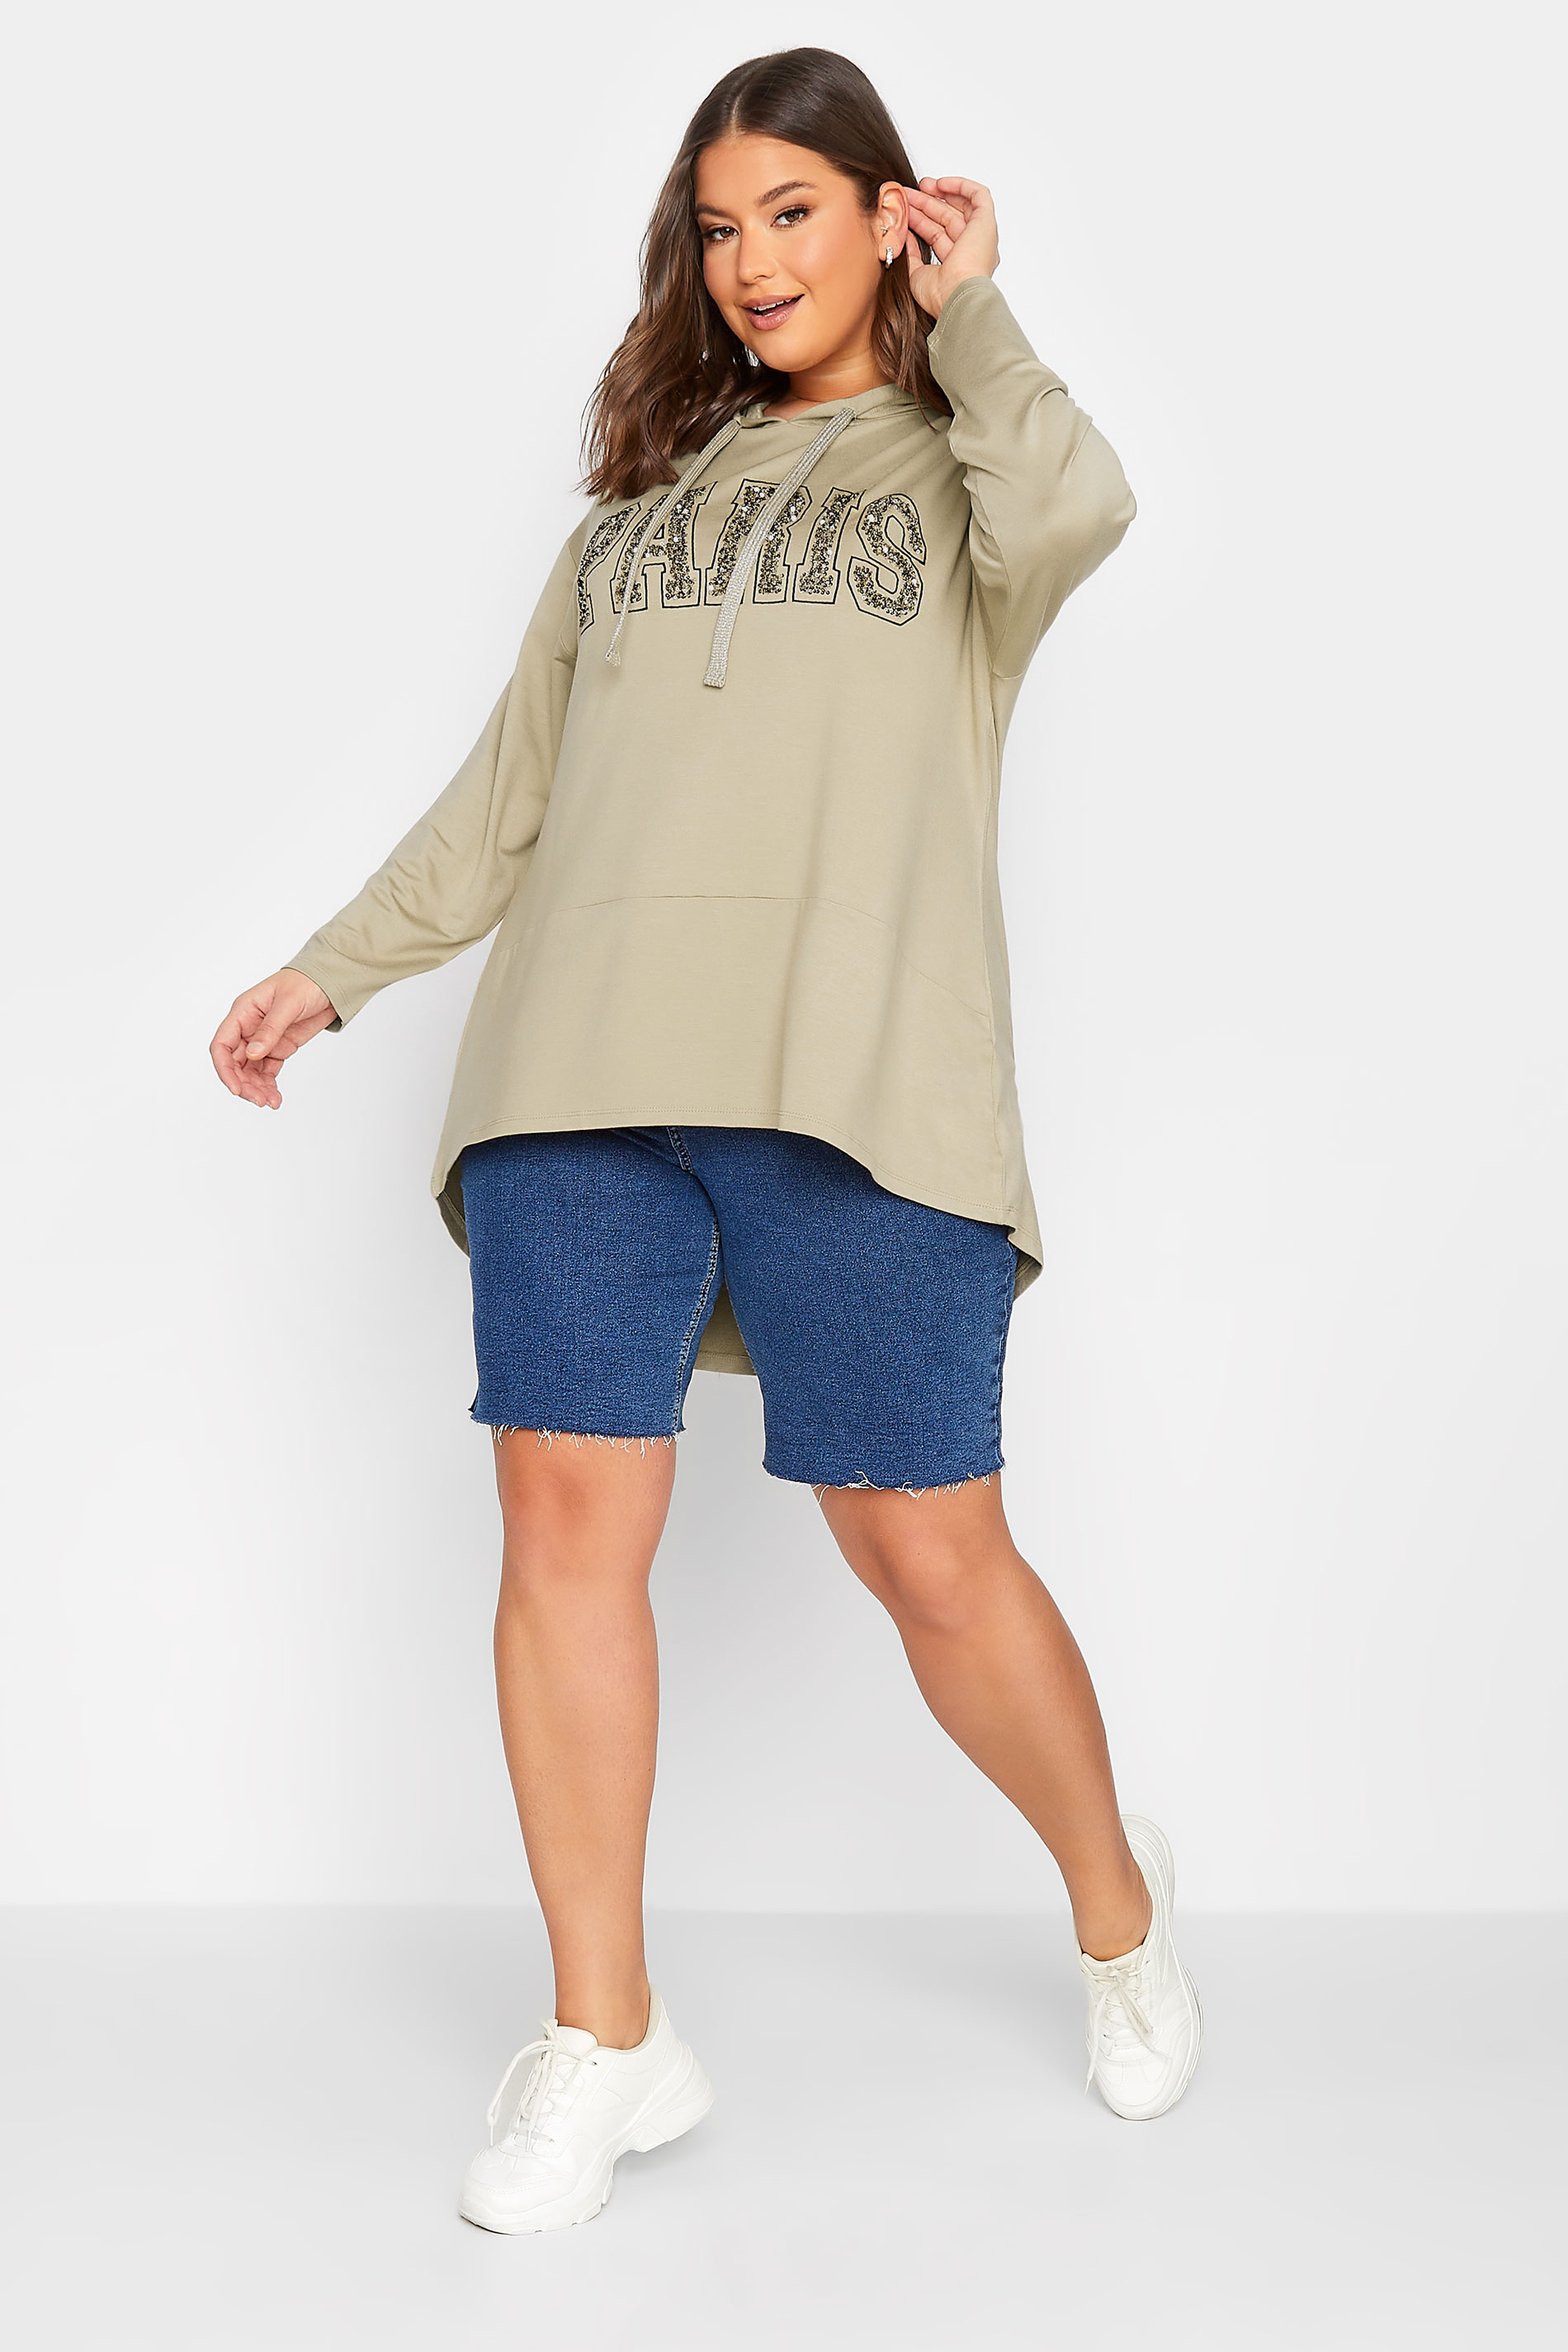 YOURS Plus Size Beige Brown 'Paris' Sequin Slogan Longline Hoodie | Yours Clothing 2